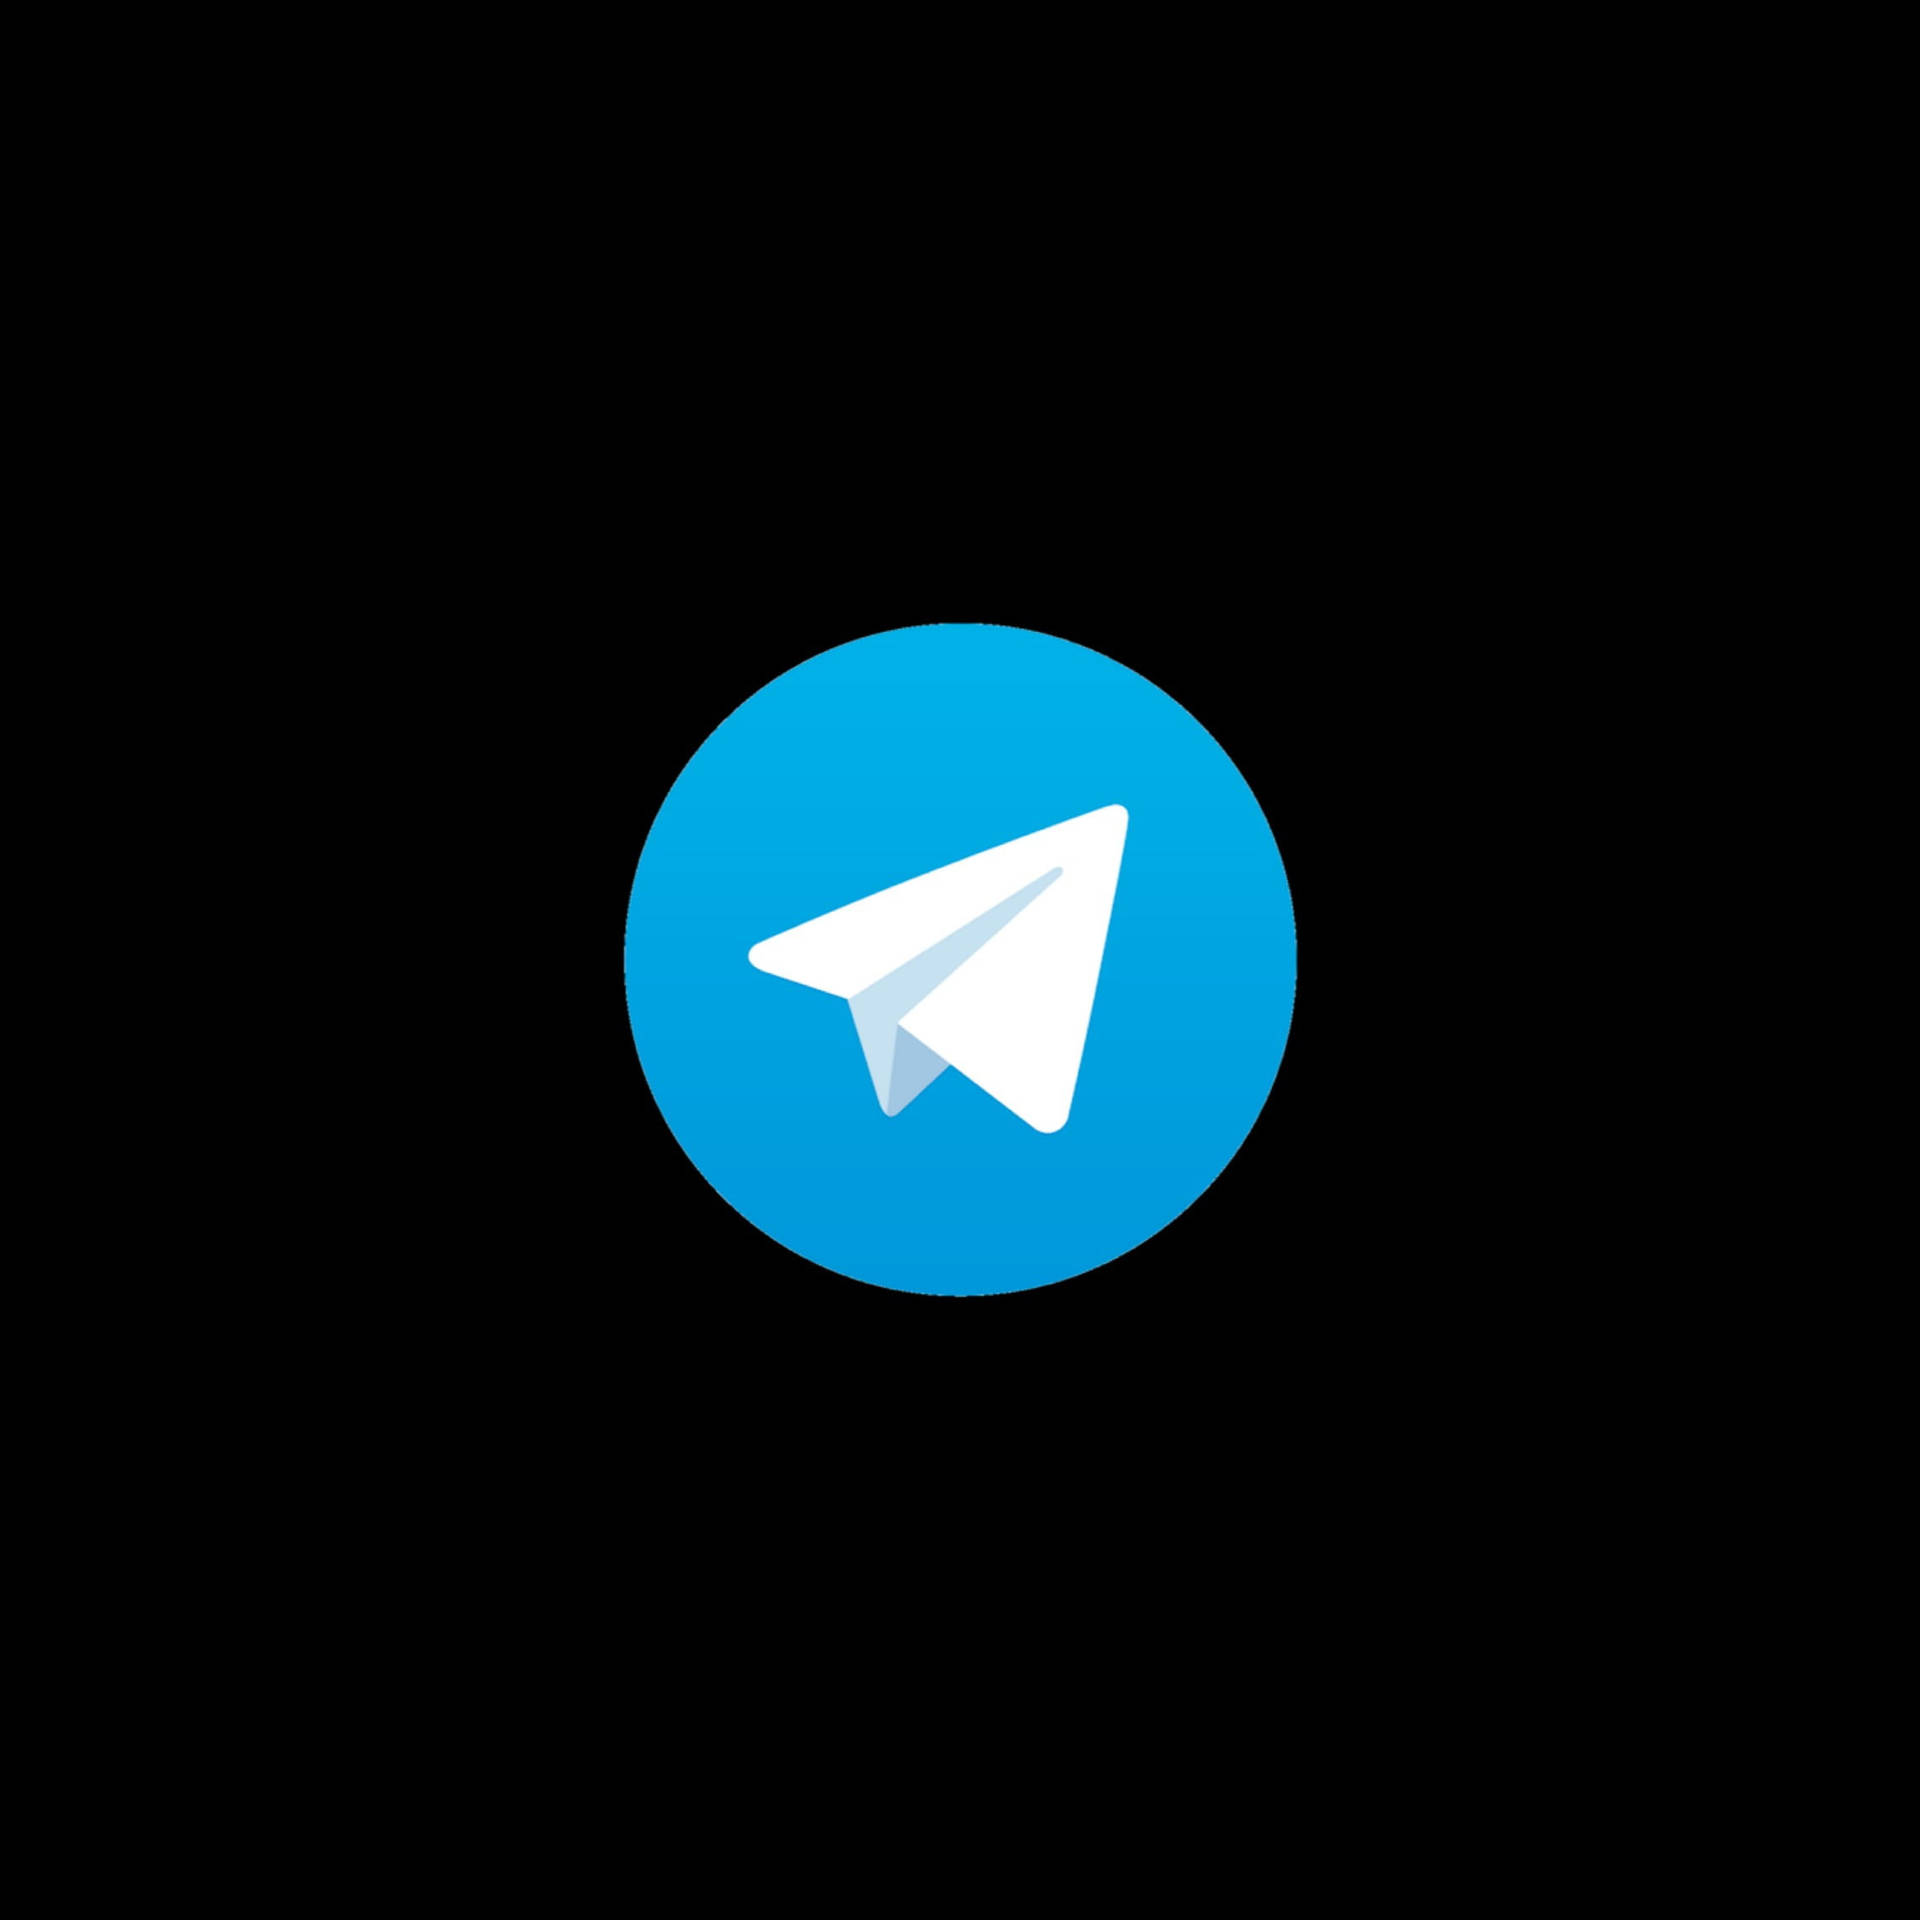 Telegram Logo Black Background